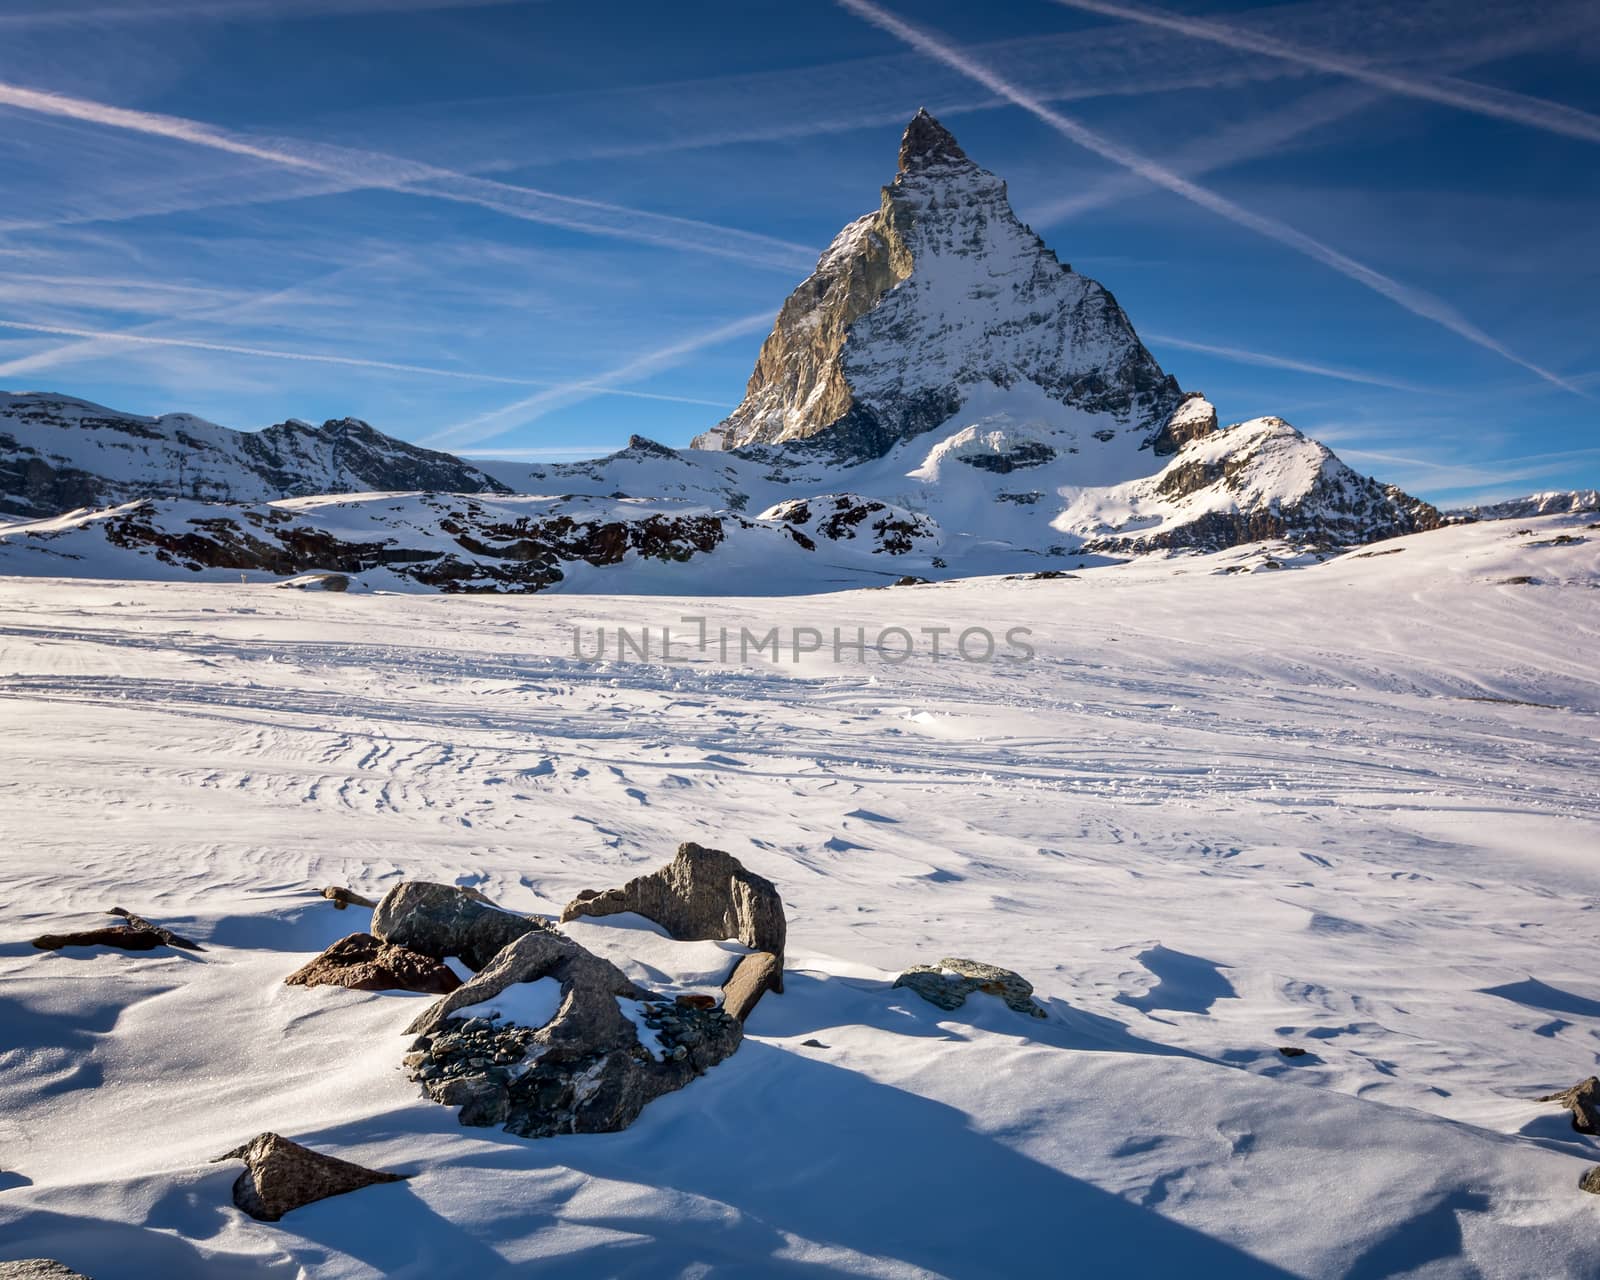 View of Matterhorn on a clear sunny day from the ski slope, Zermatt, Switzerland